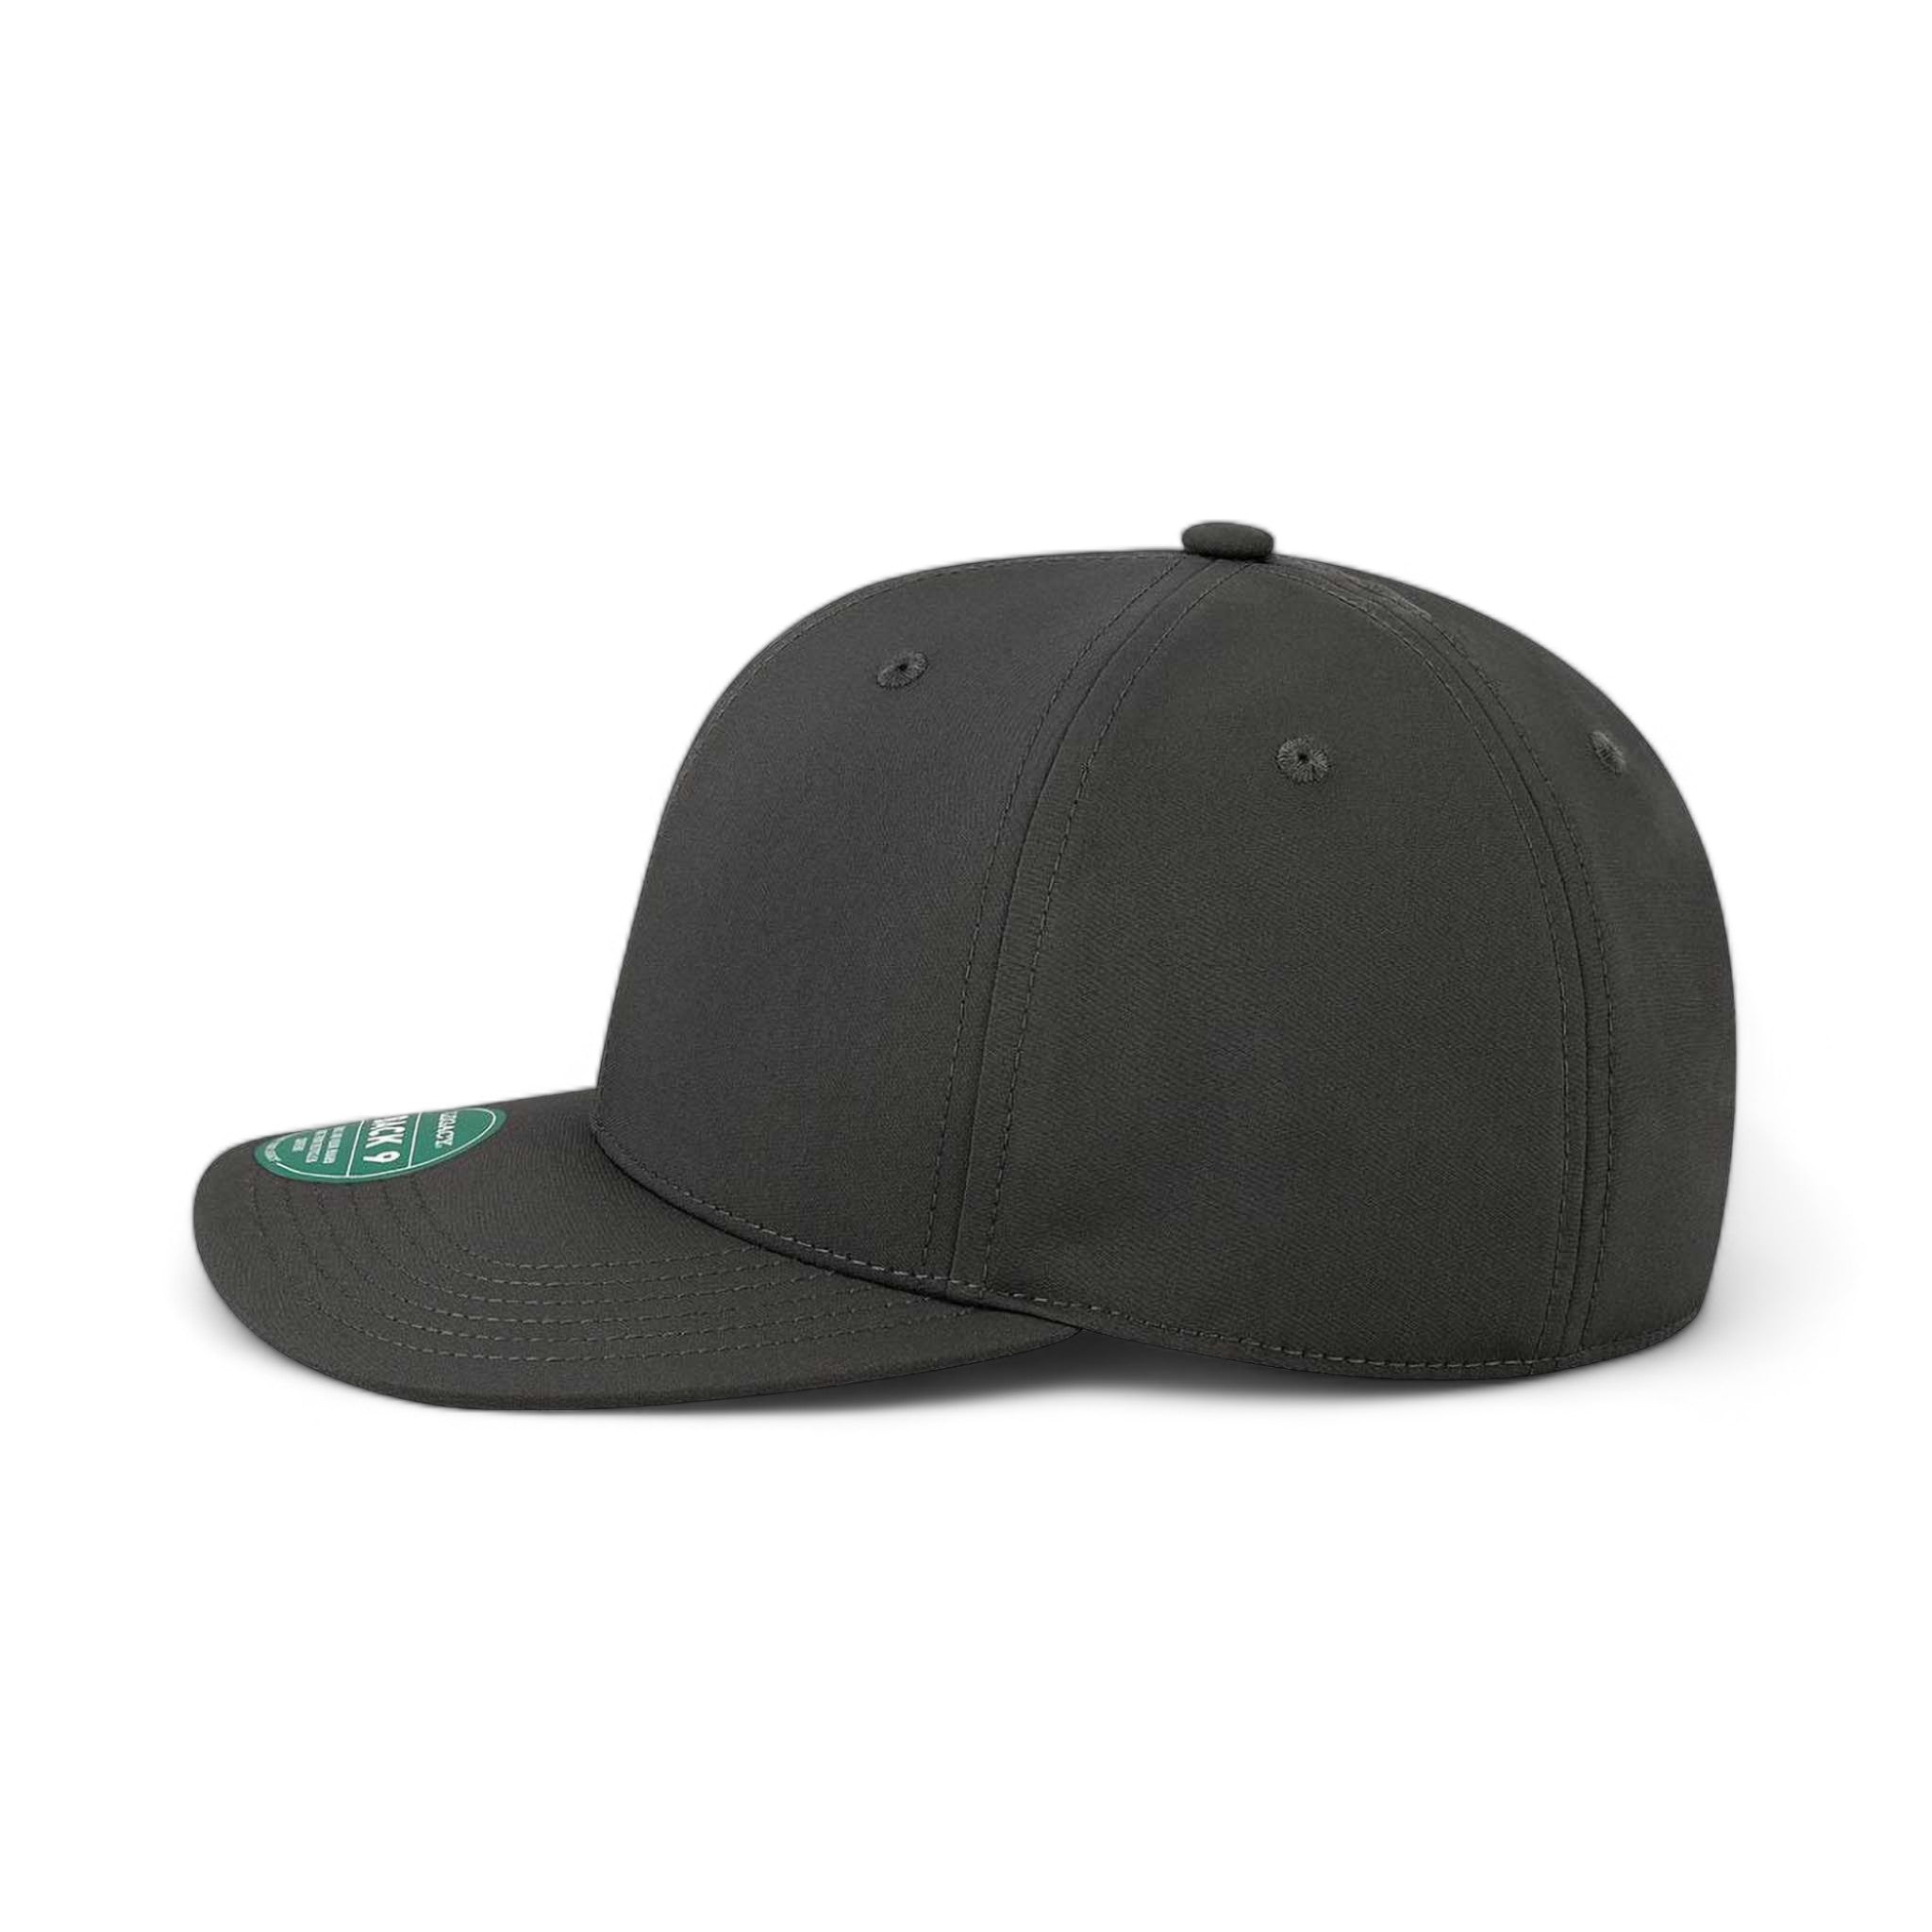 Side view of LEGACY B9A custom hat in black